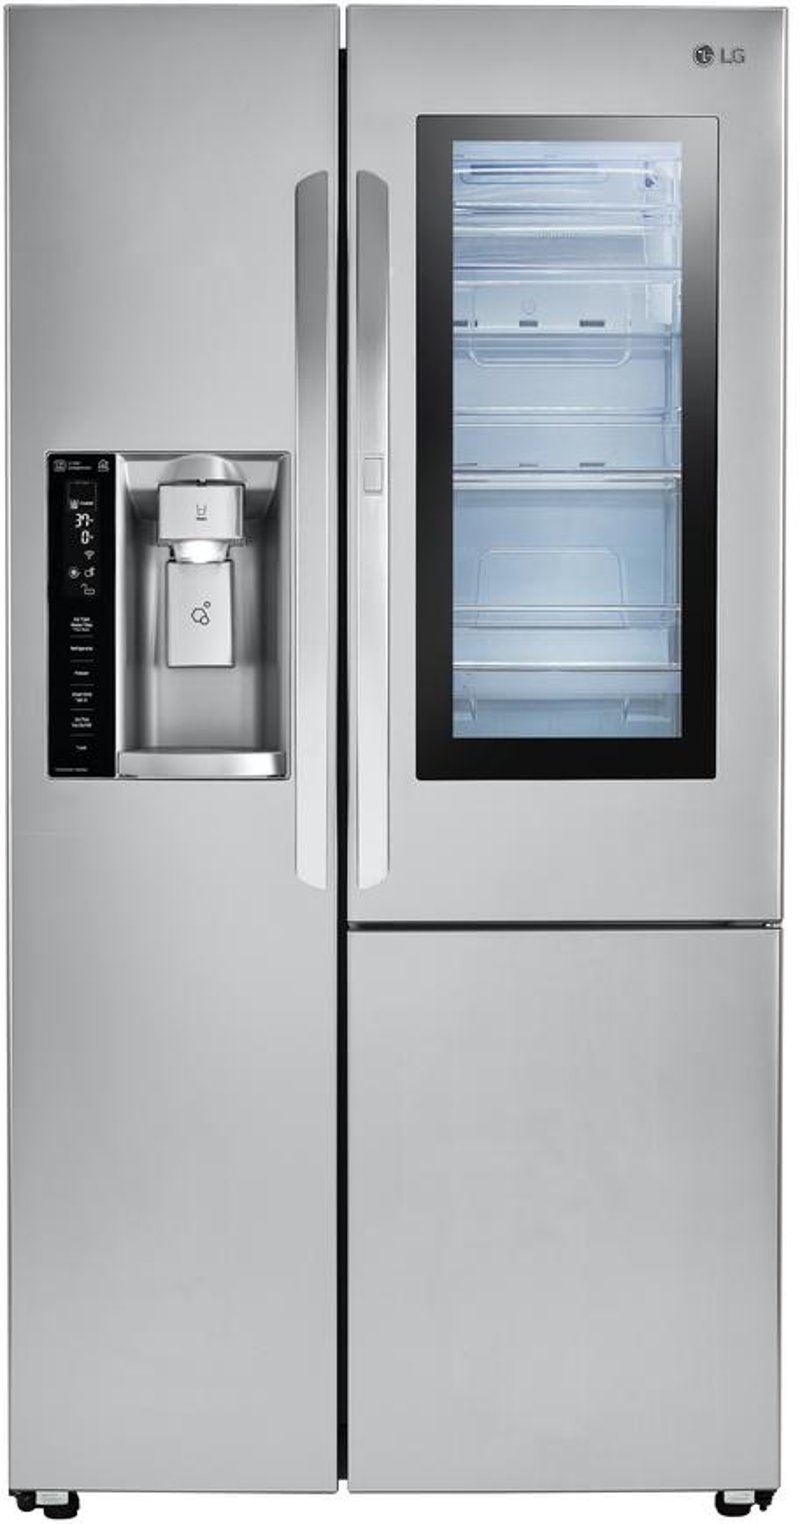 LG Side by Side DoorinDoor Smart Refrigerator 26.1 cu. ft., 36 Inch Stainless Steel RC